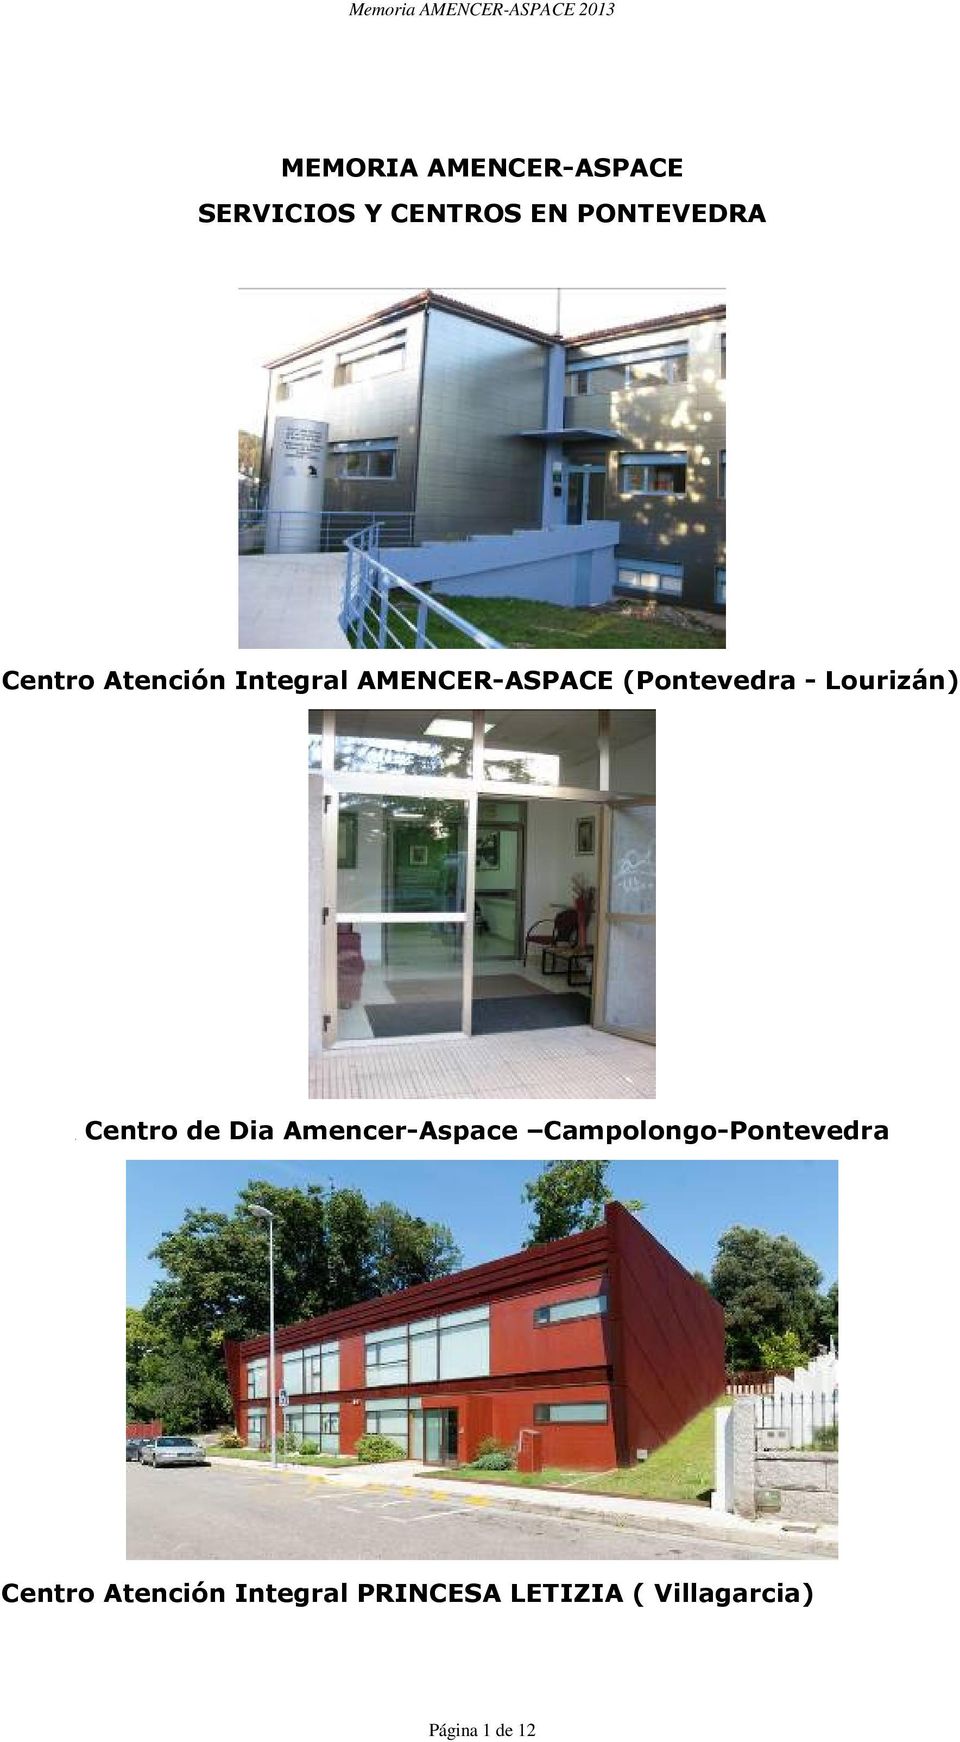 Lourizán) Centro de Dia Amencer-Aspace Campolongo-Pontevedra